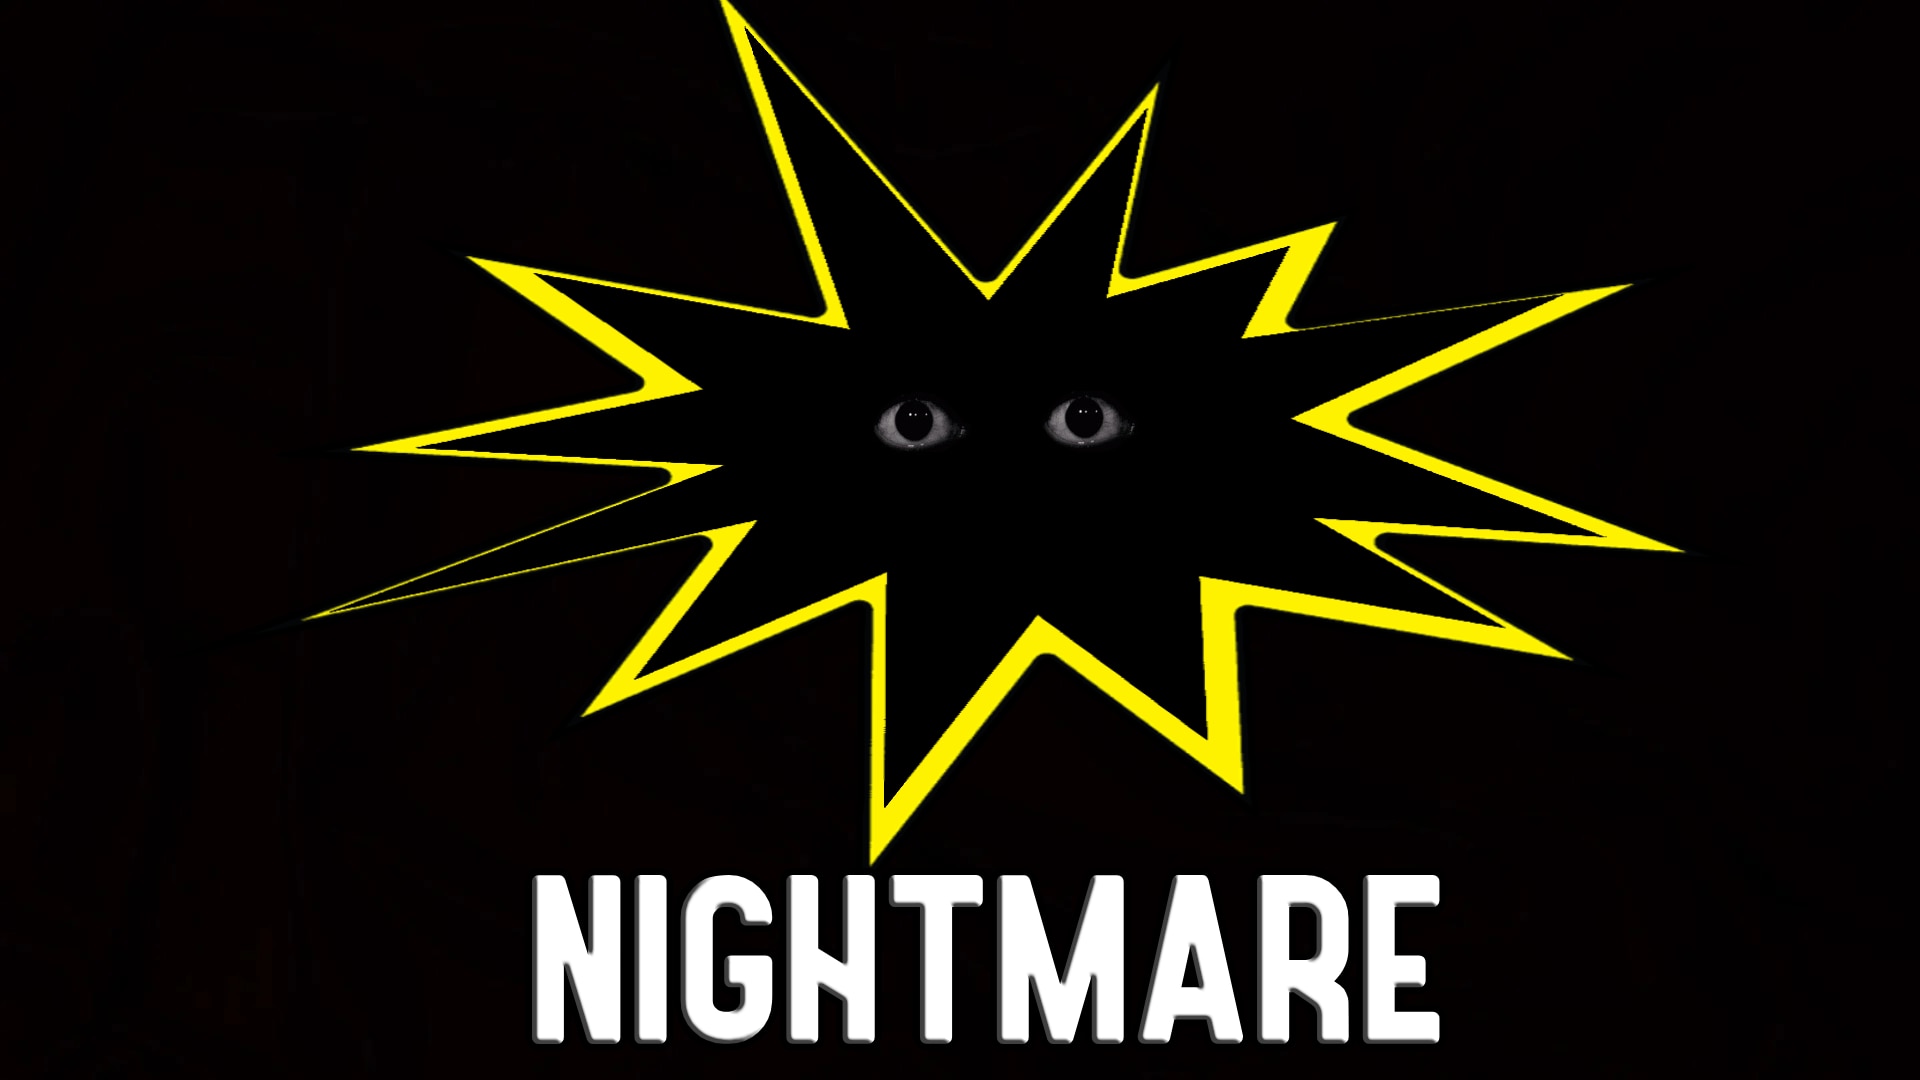 Nightmare Nextbot [Garry's Mod] [Mods]